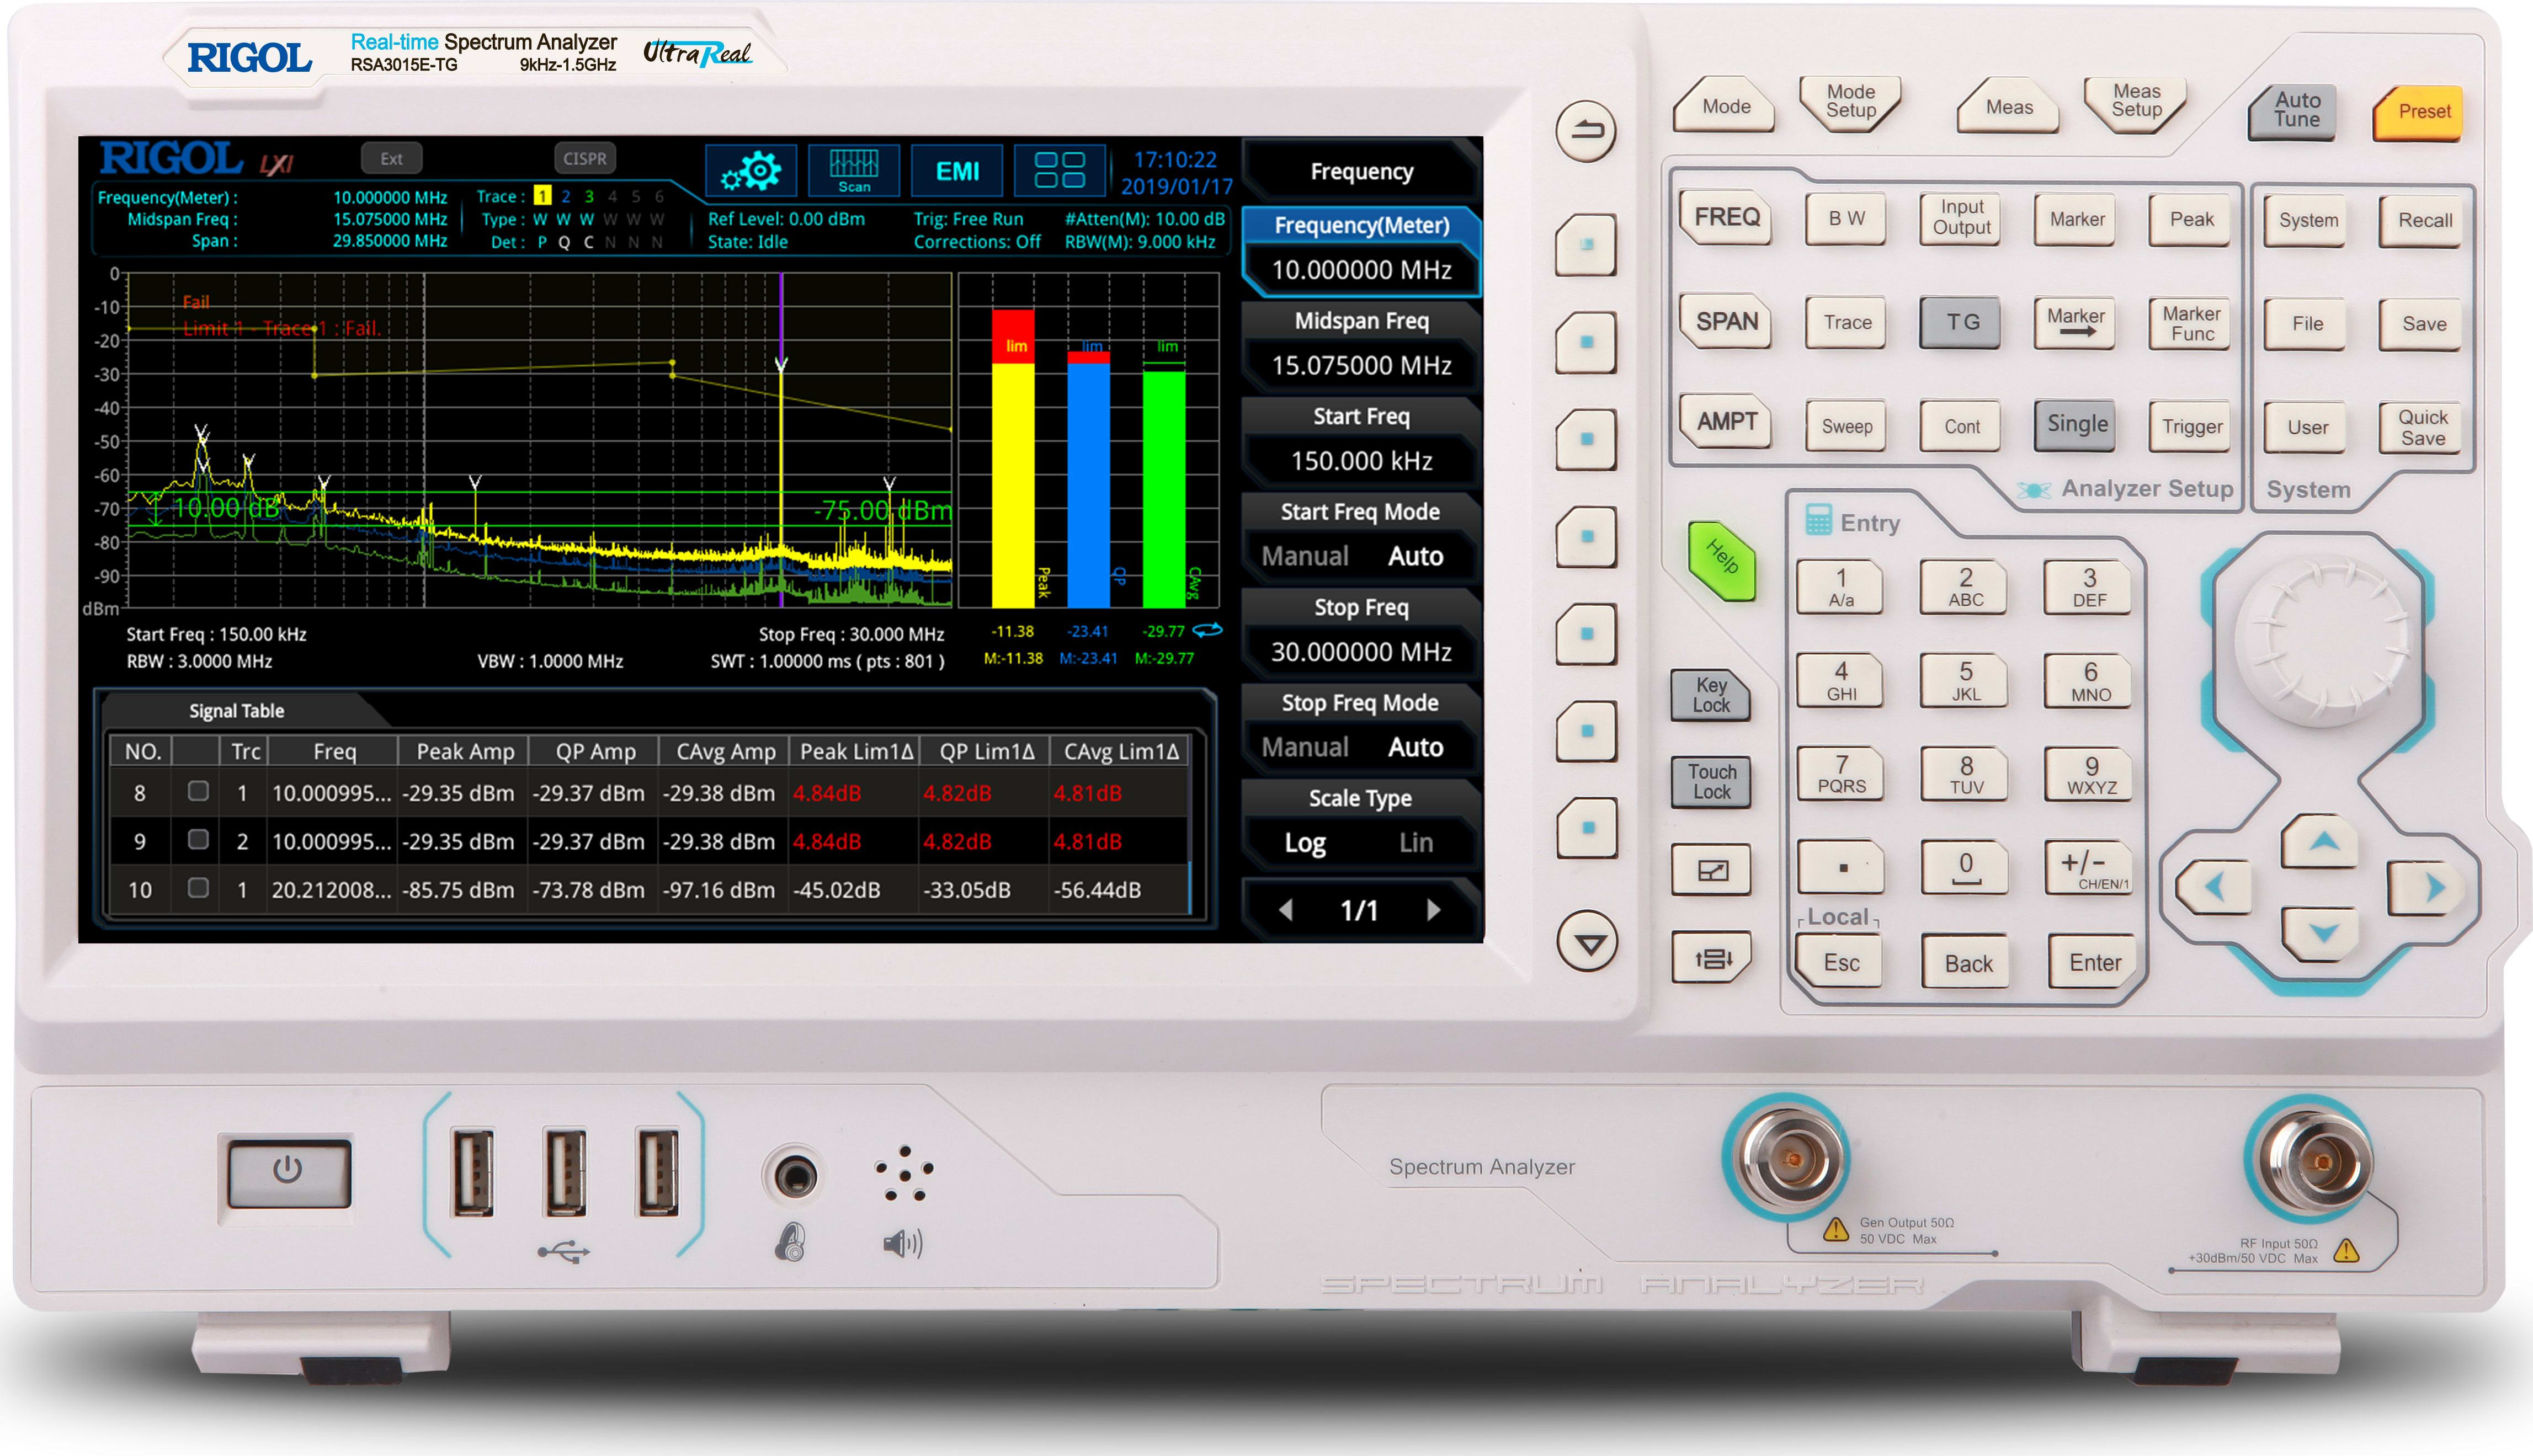 Rigol RSA3015E-TG Spectrum Analyzer